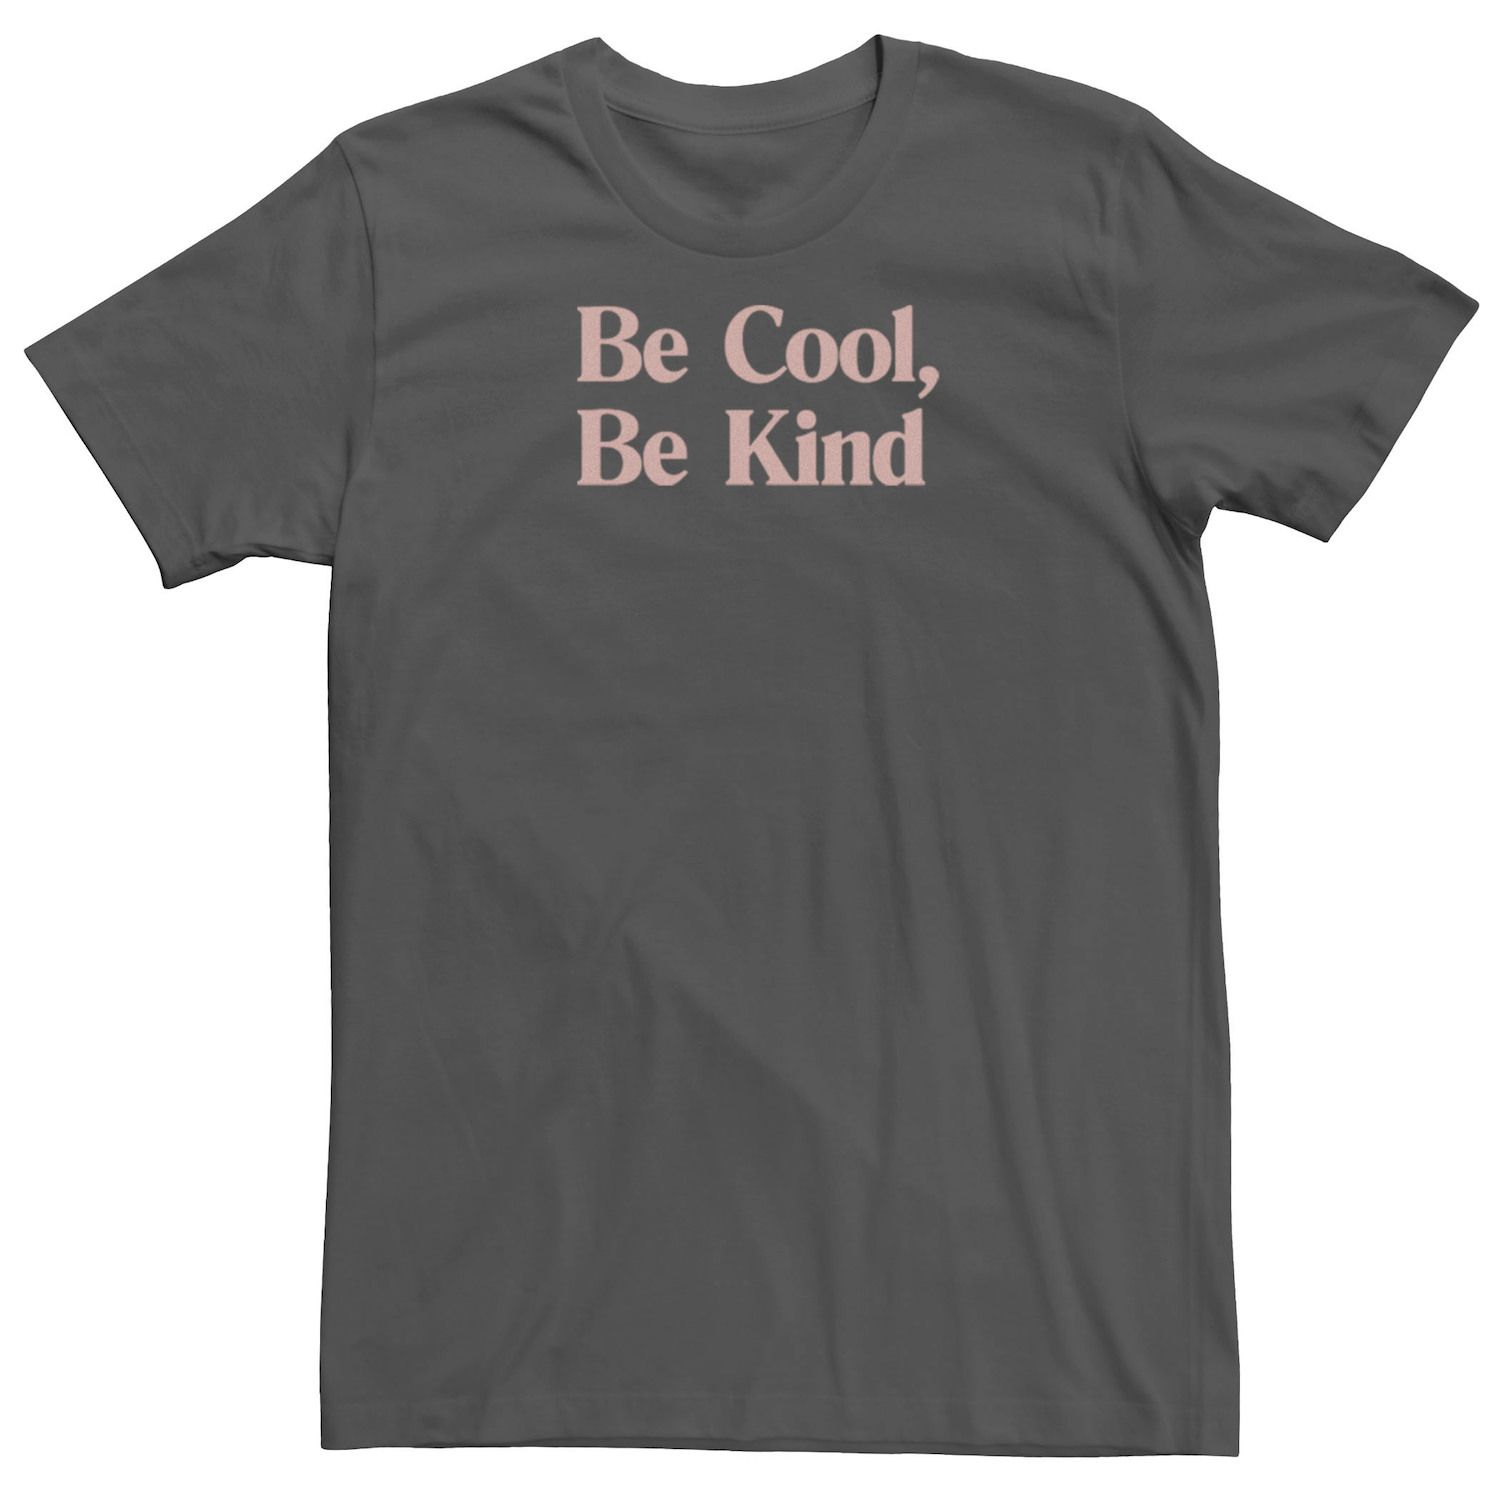 Мужская футболка с надписью Fifth Sun Be Cool Be Kind Licensed Character мужская футболка be kind s темно синий